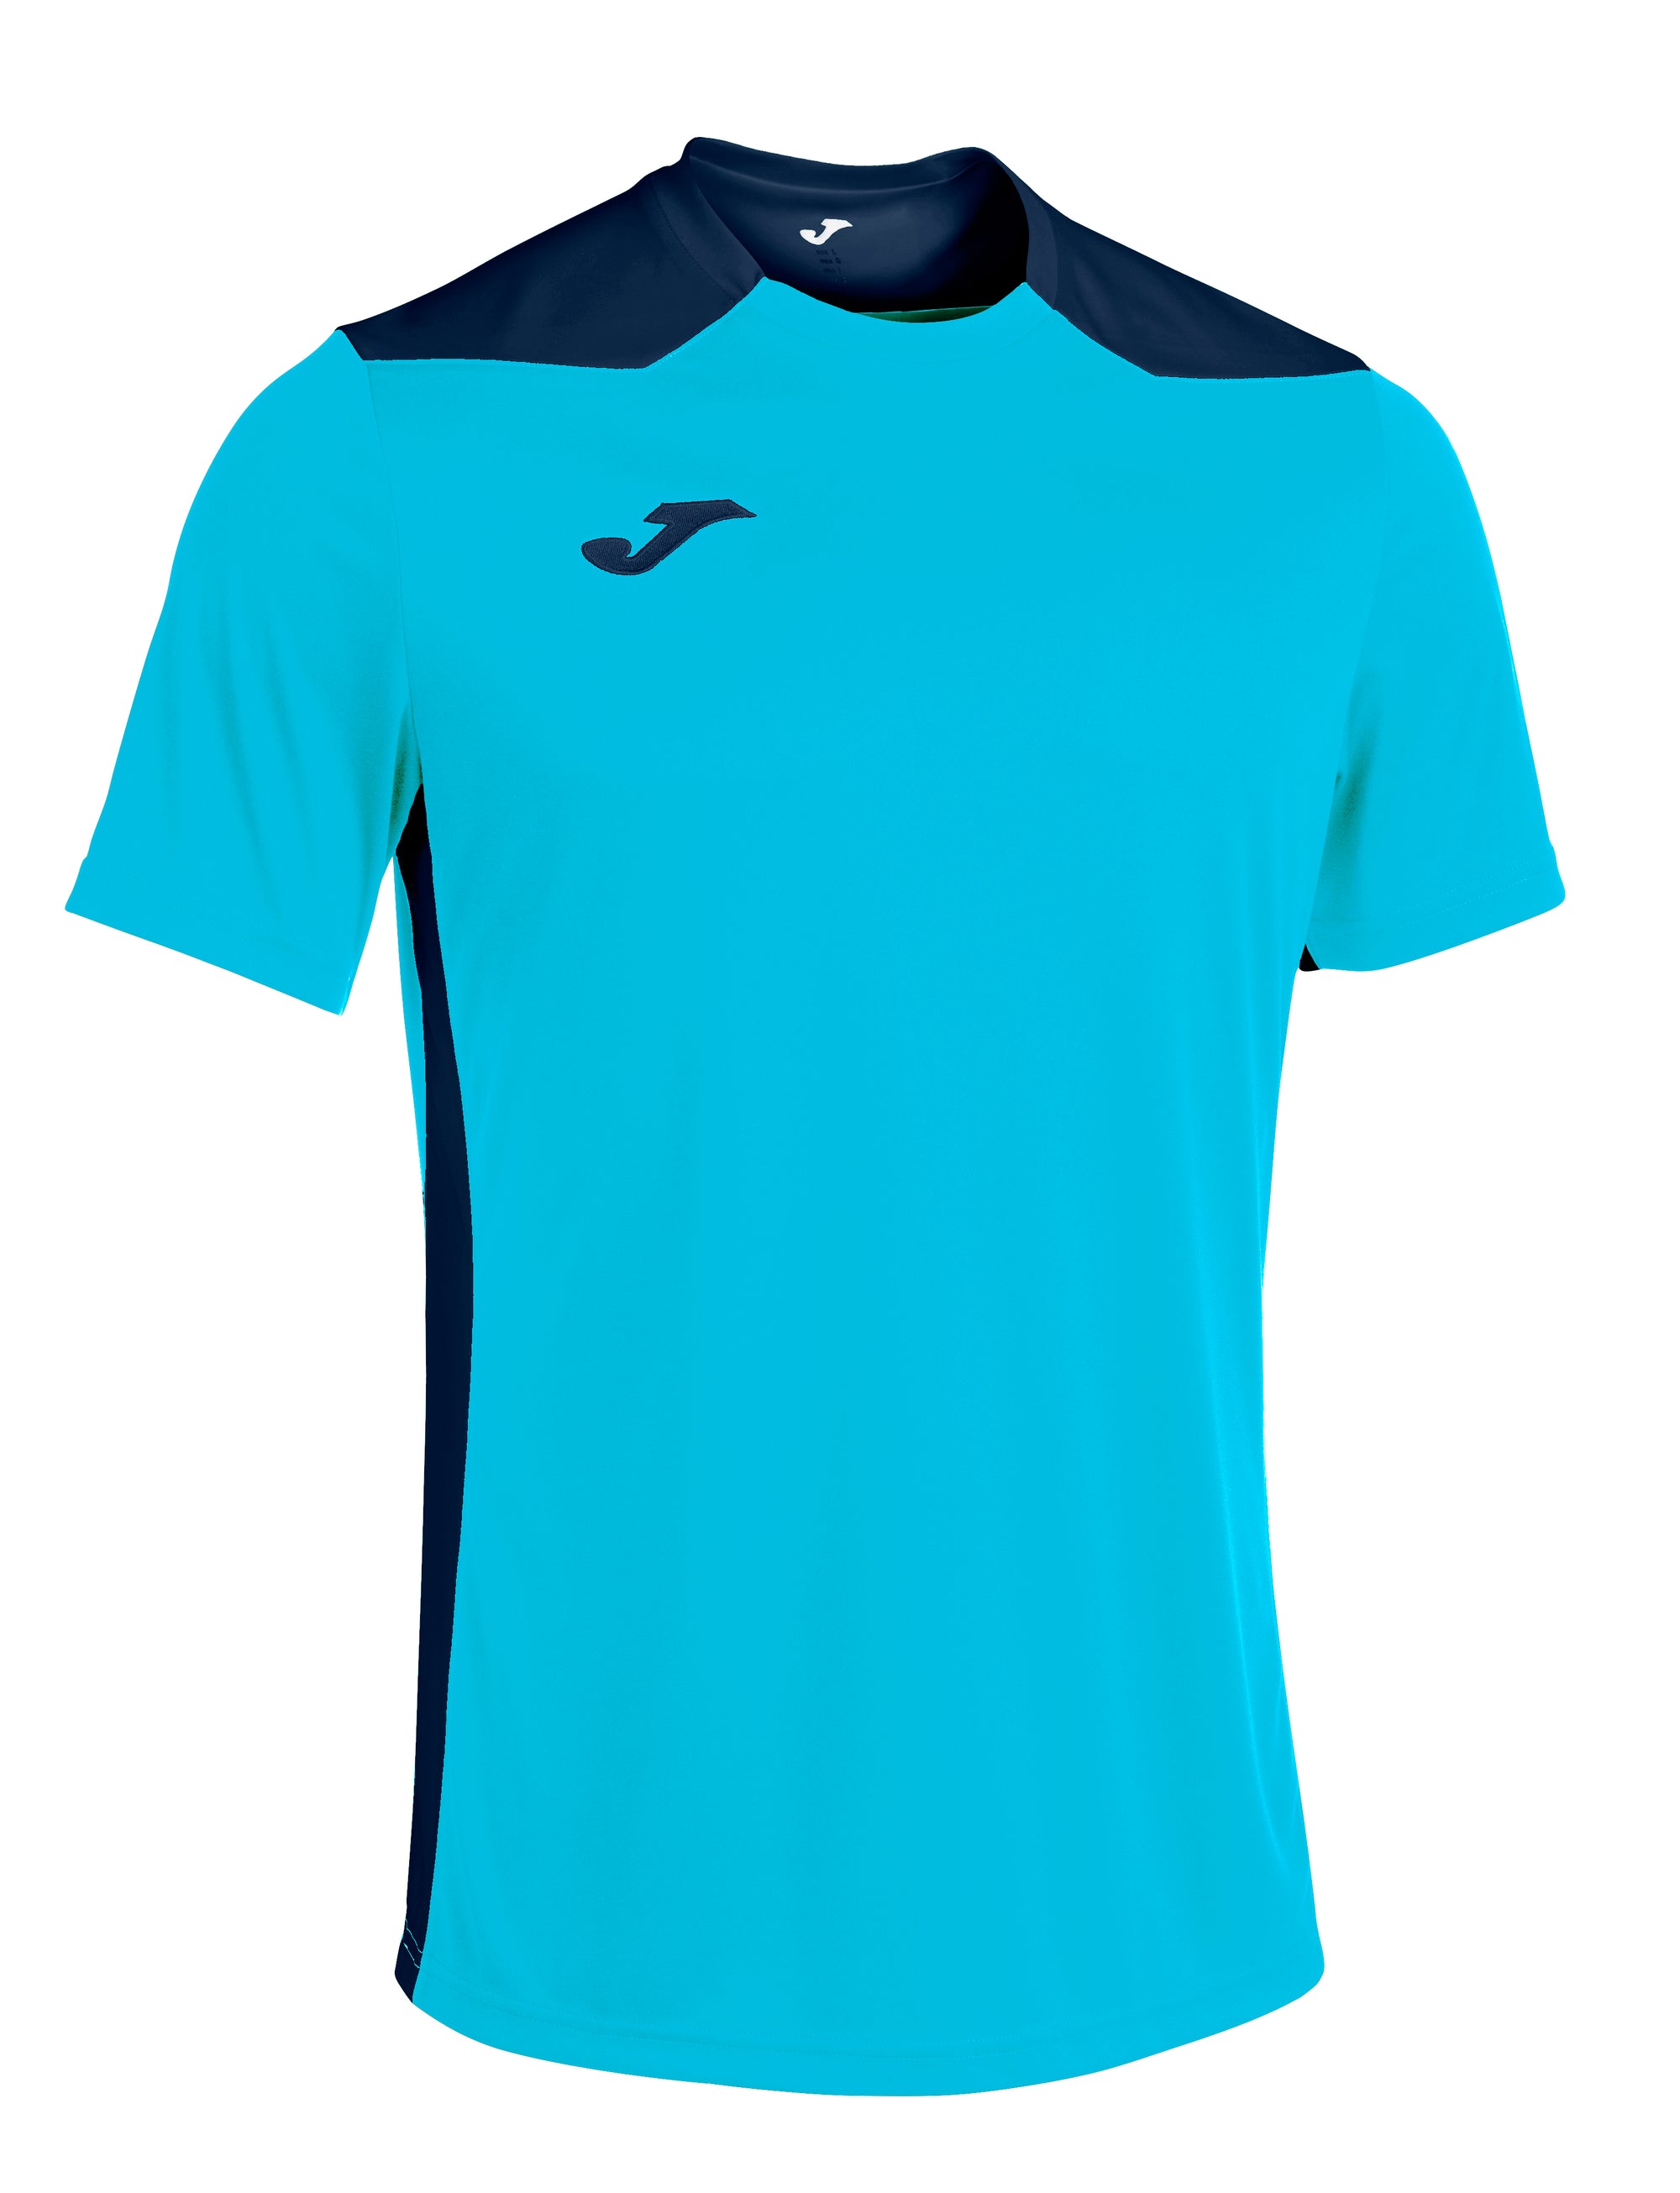 Joma Championship VI Short Sleeved T-Shirt - Turquoise Fluor/Dark Navy